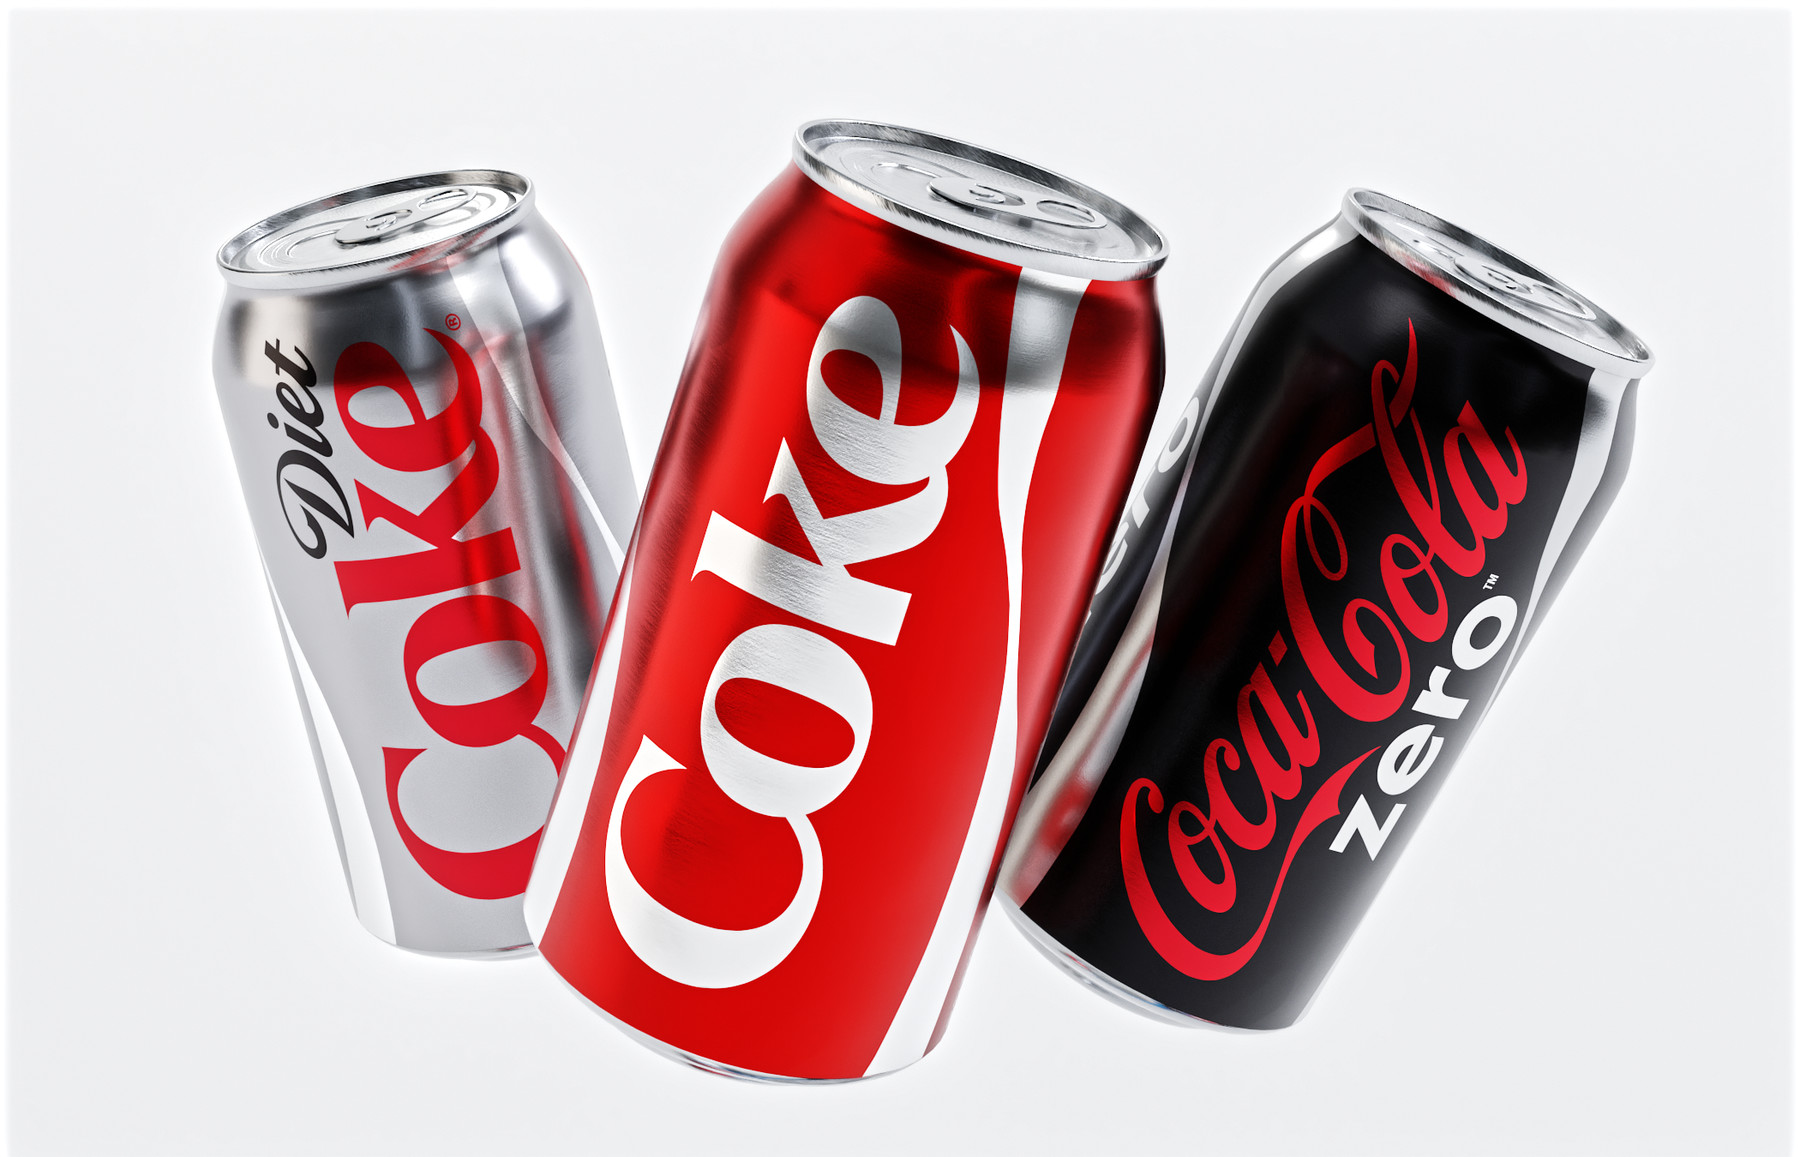 Products Coca-Cola Classic